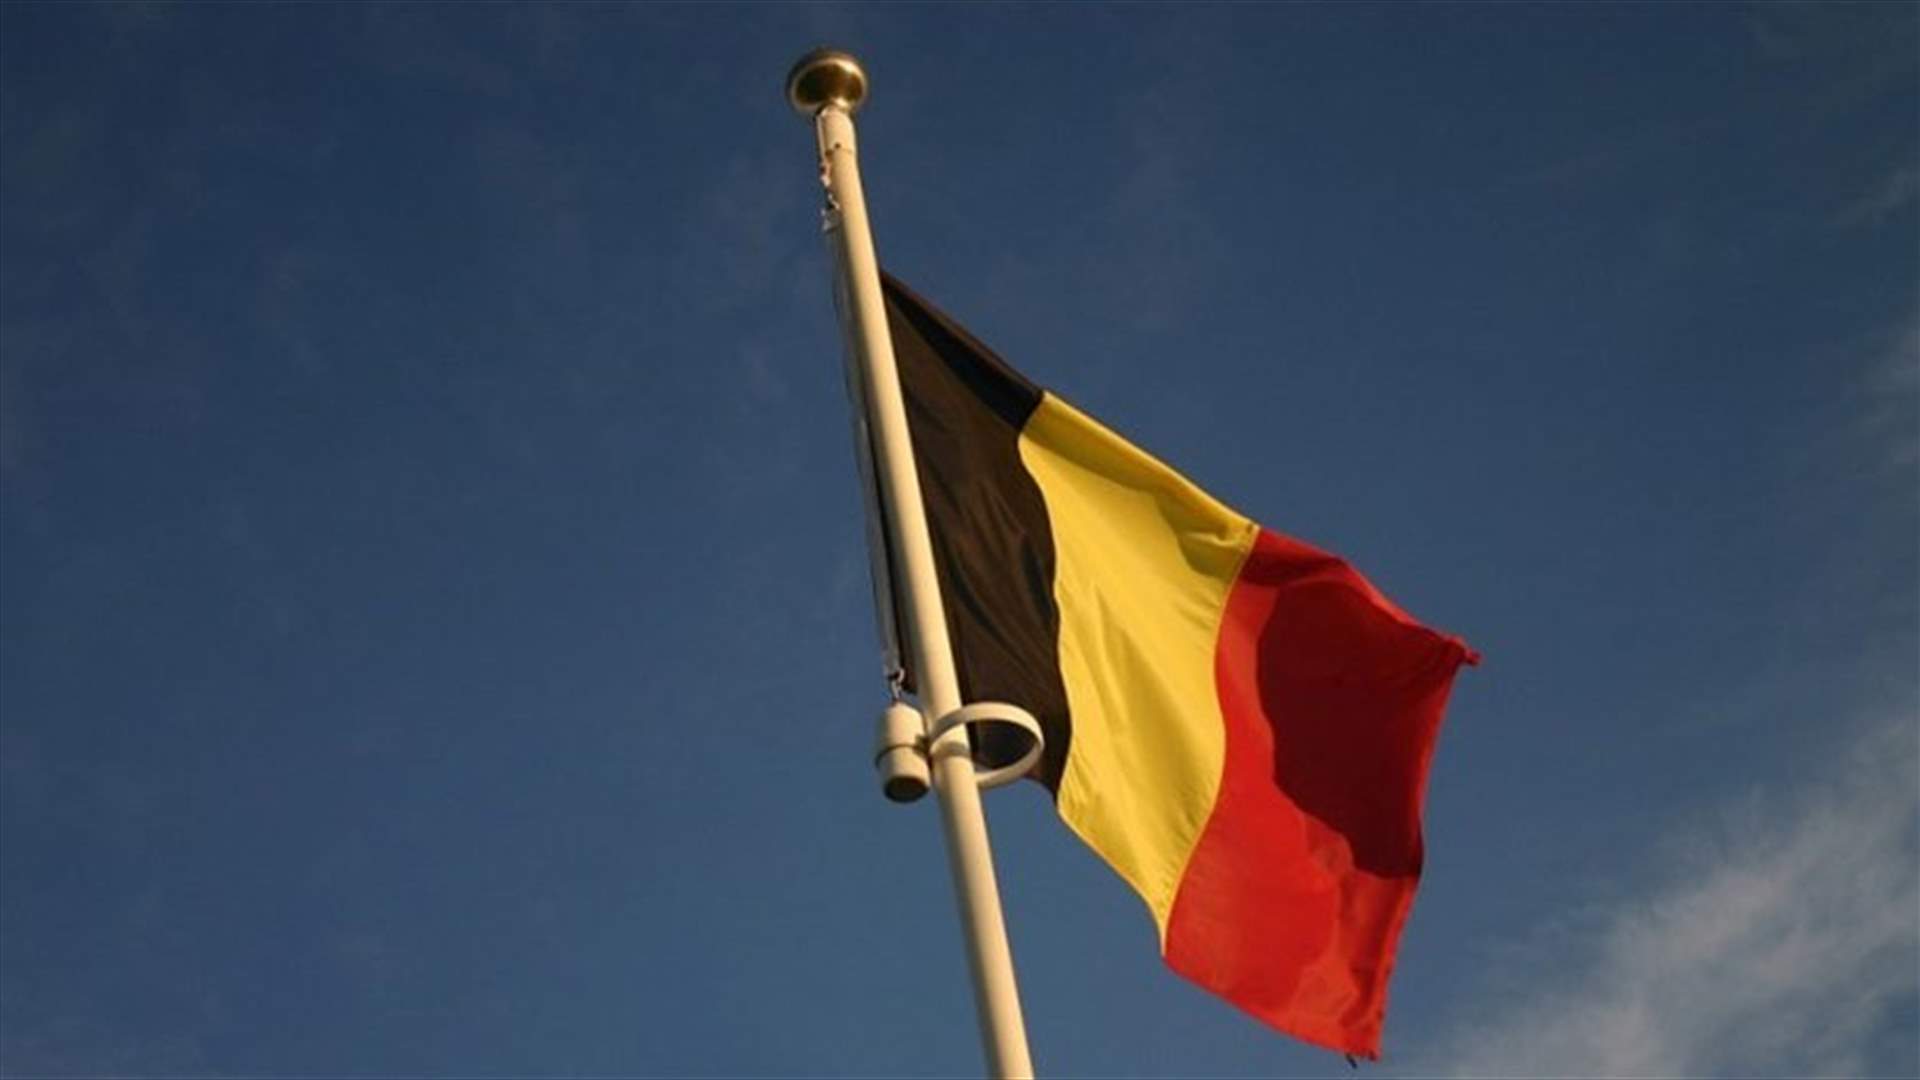 Belgian judge orders repatriation of 6 children of Islamic State militants -Belga